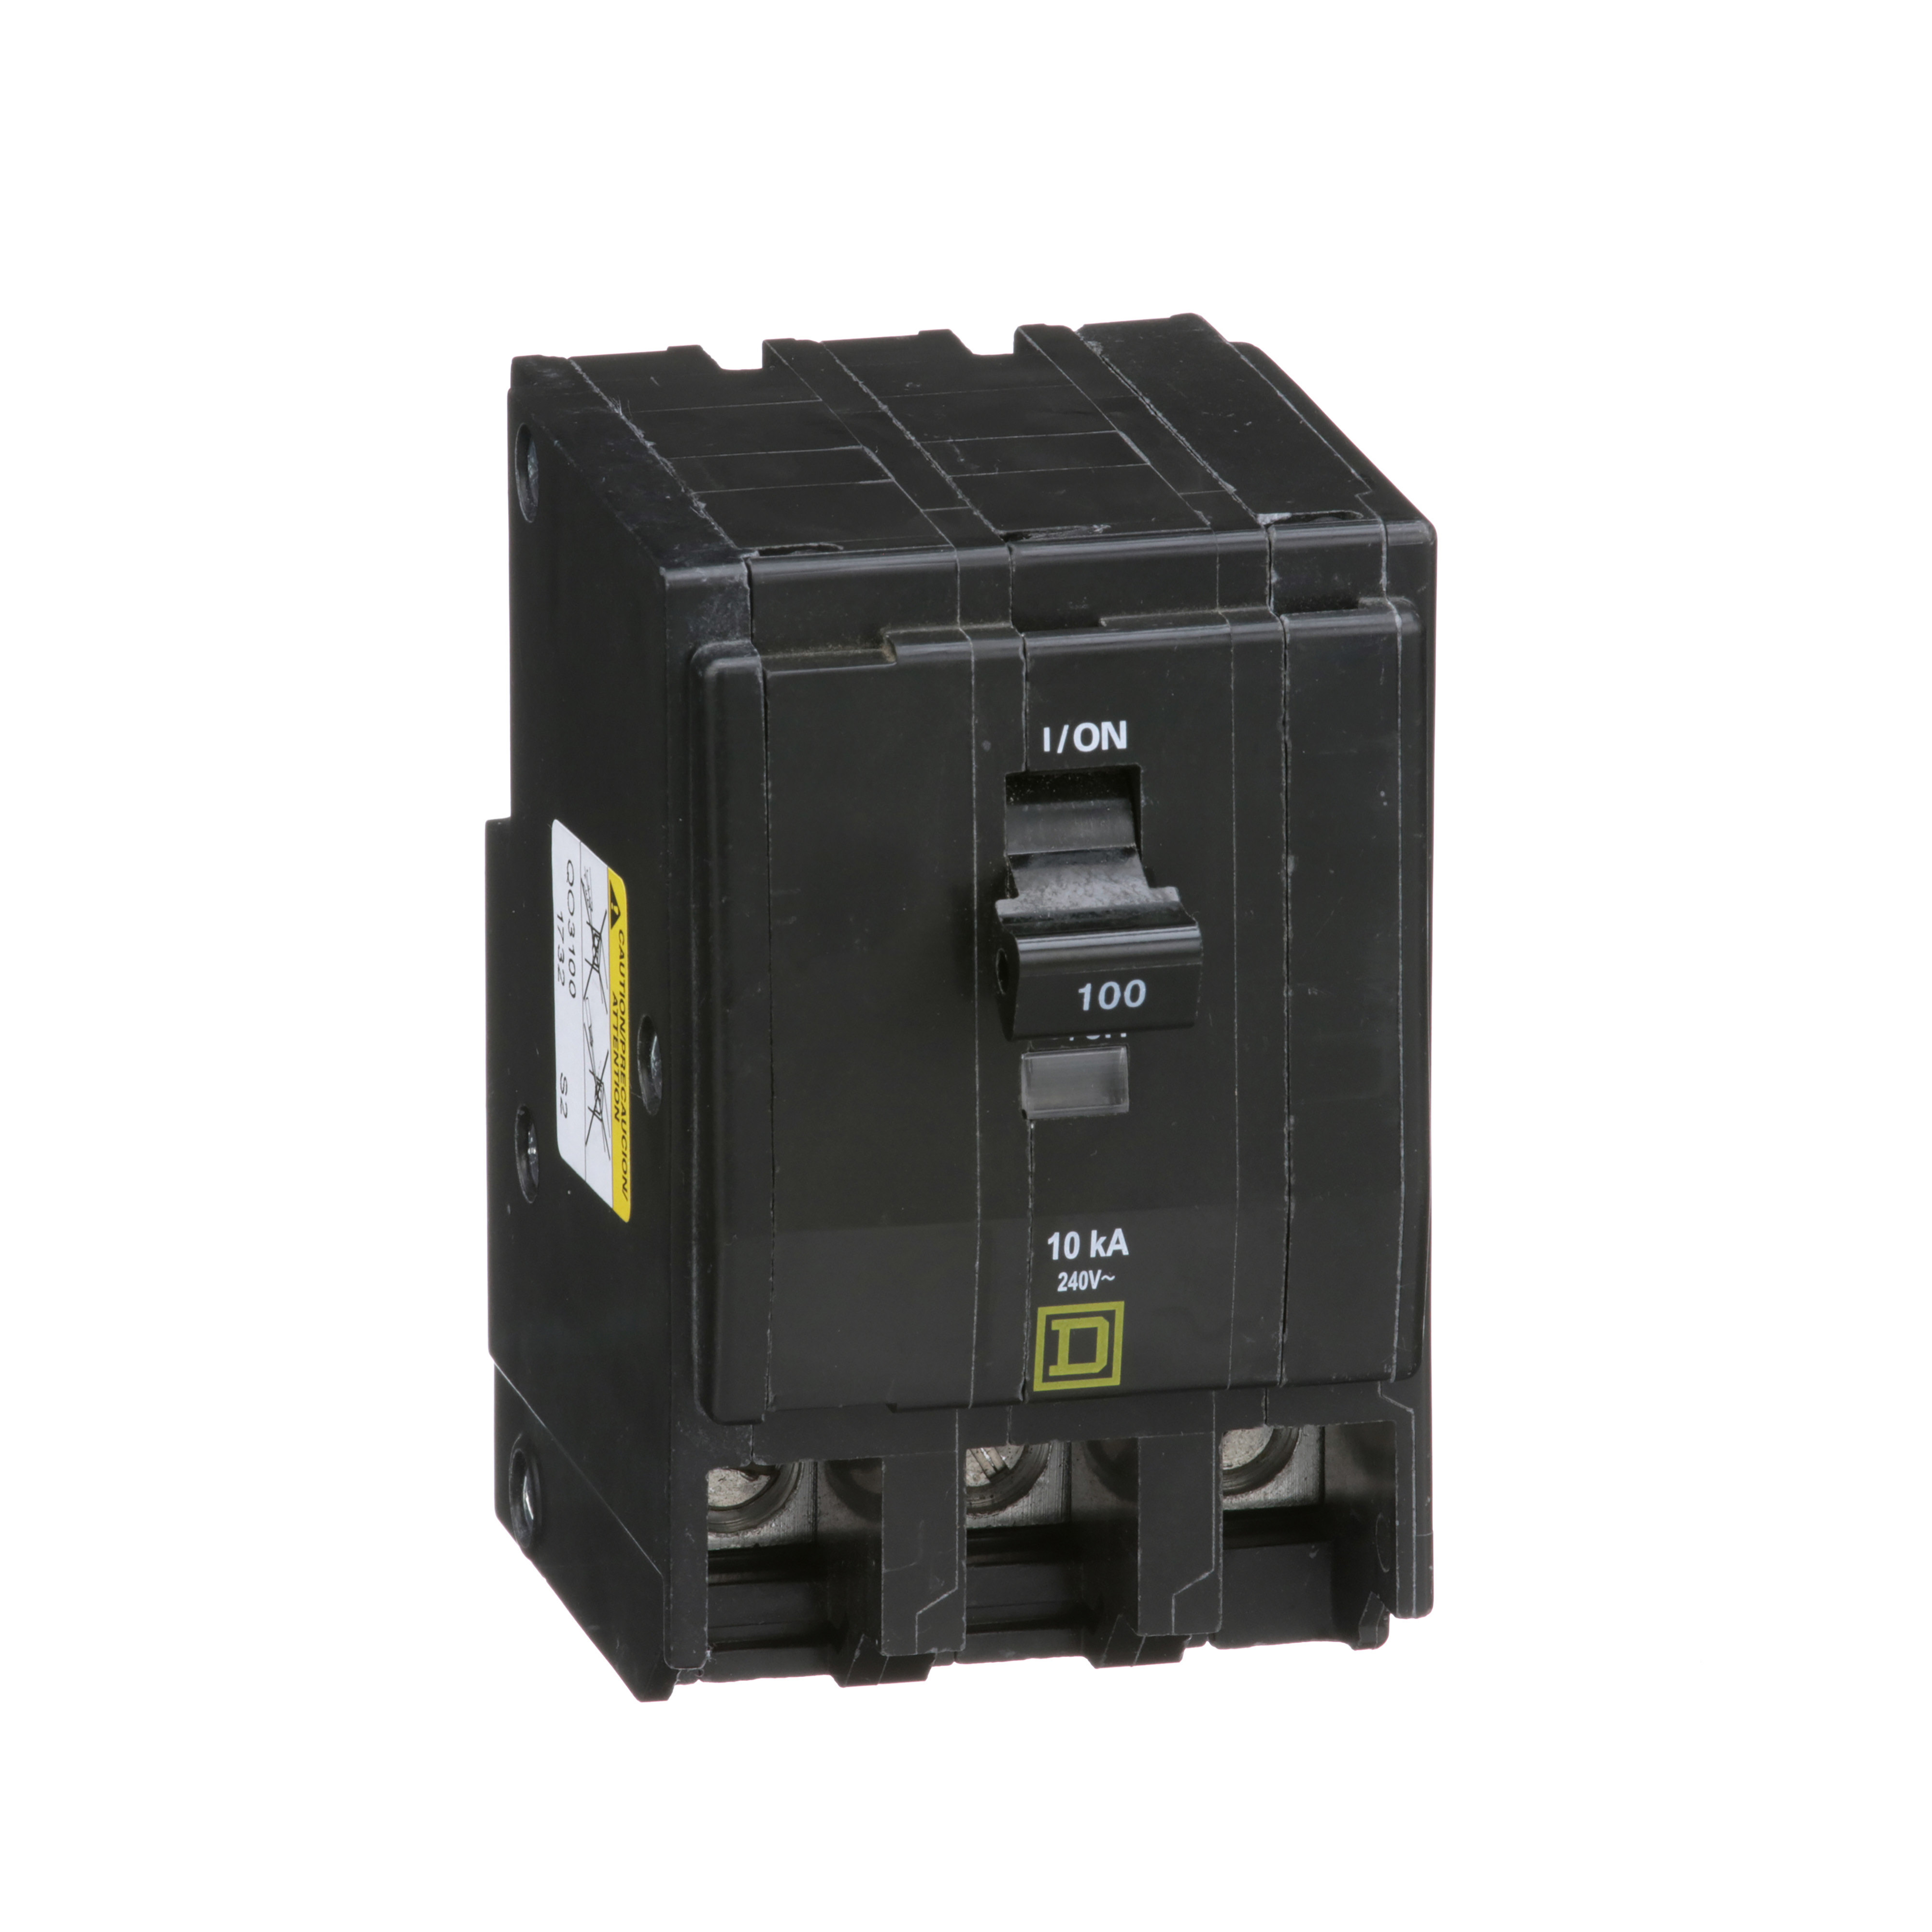 Mini circuit breaker, QO, 100A, 3 pole, 120/240VAC, 10kA, plug in